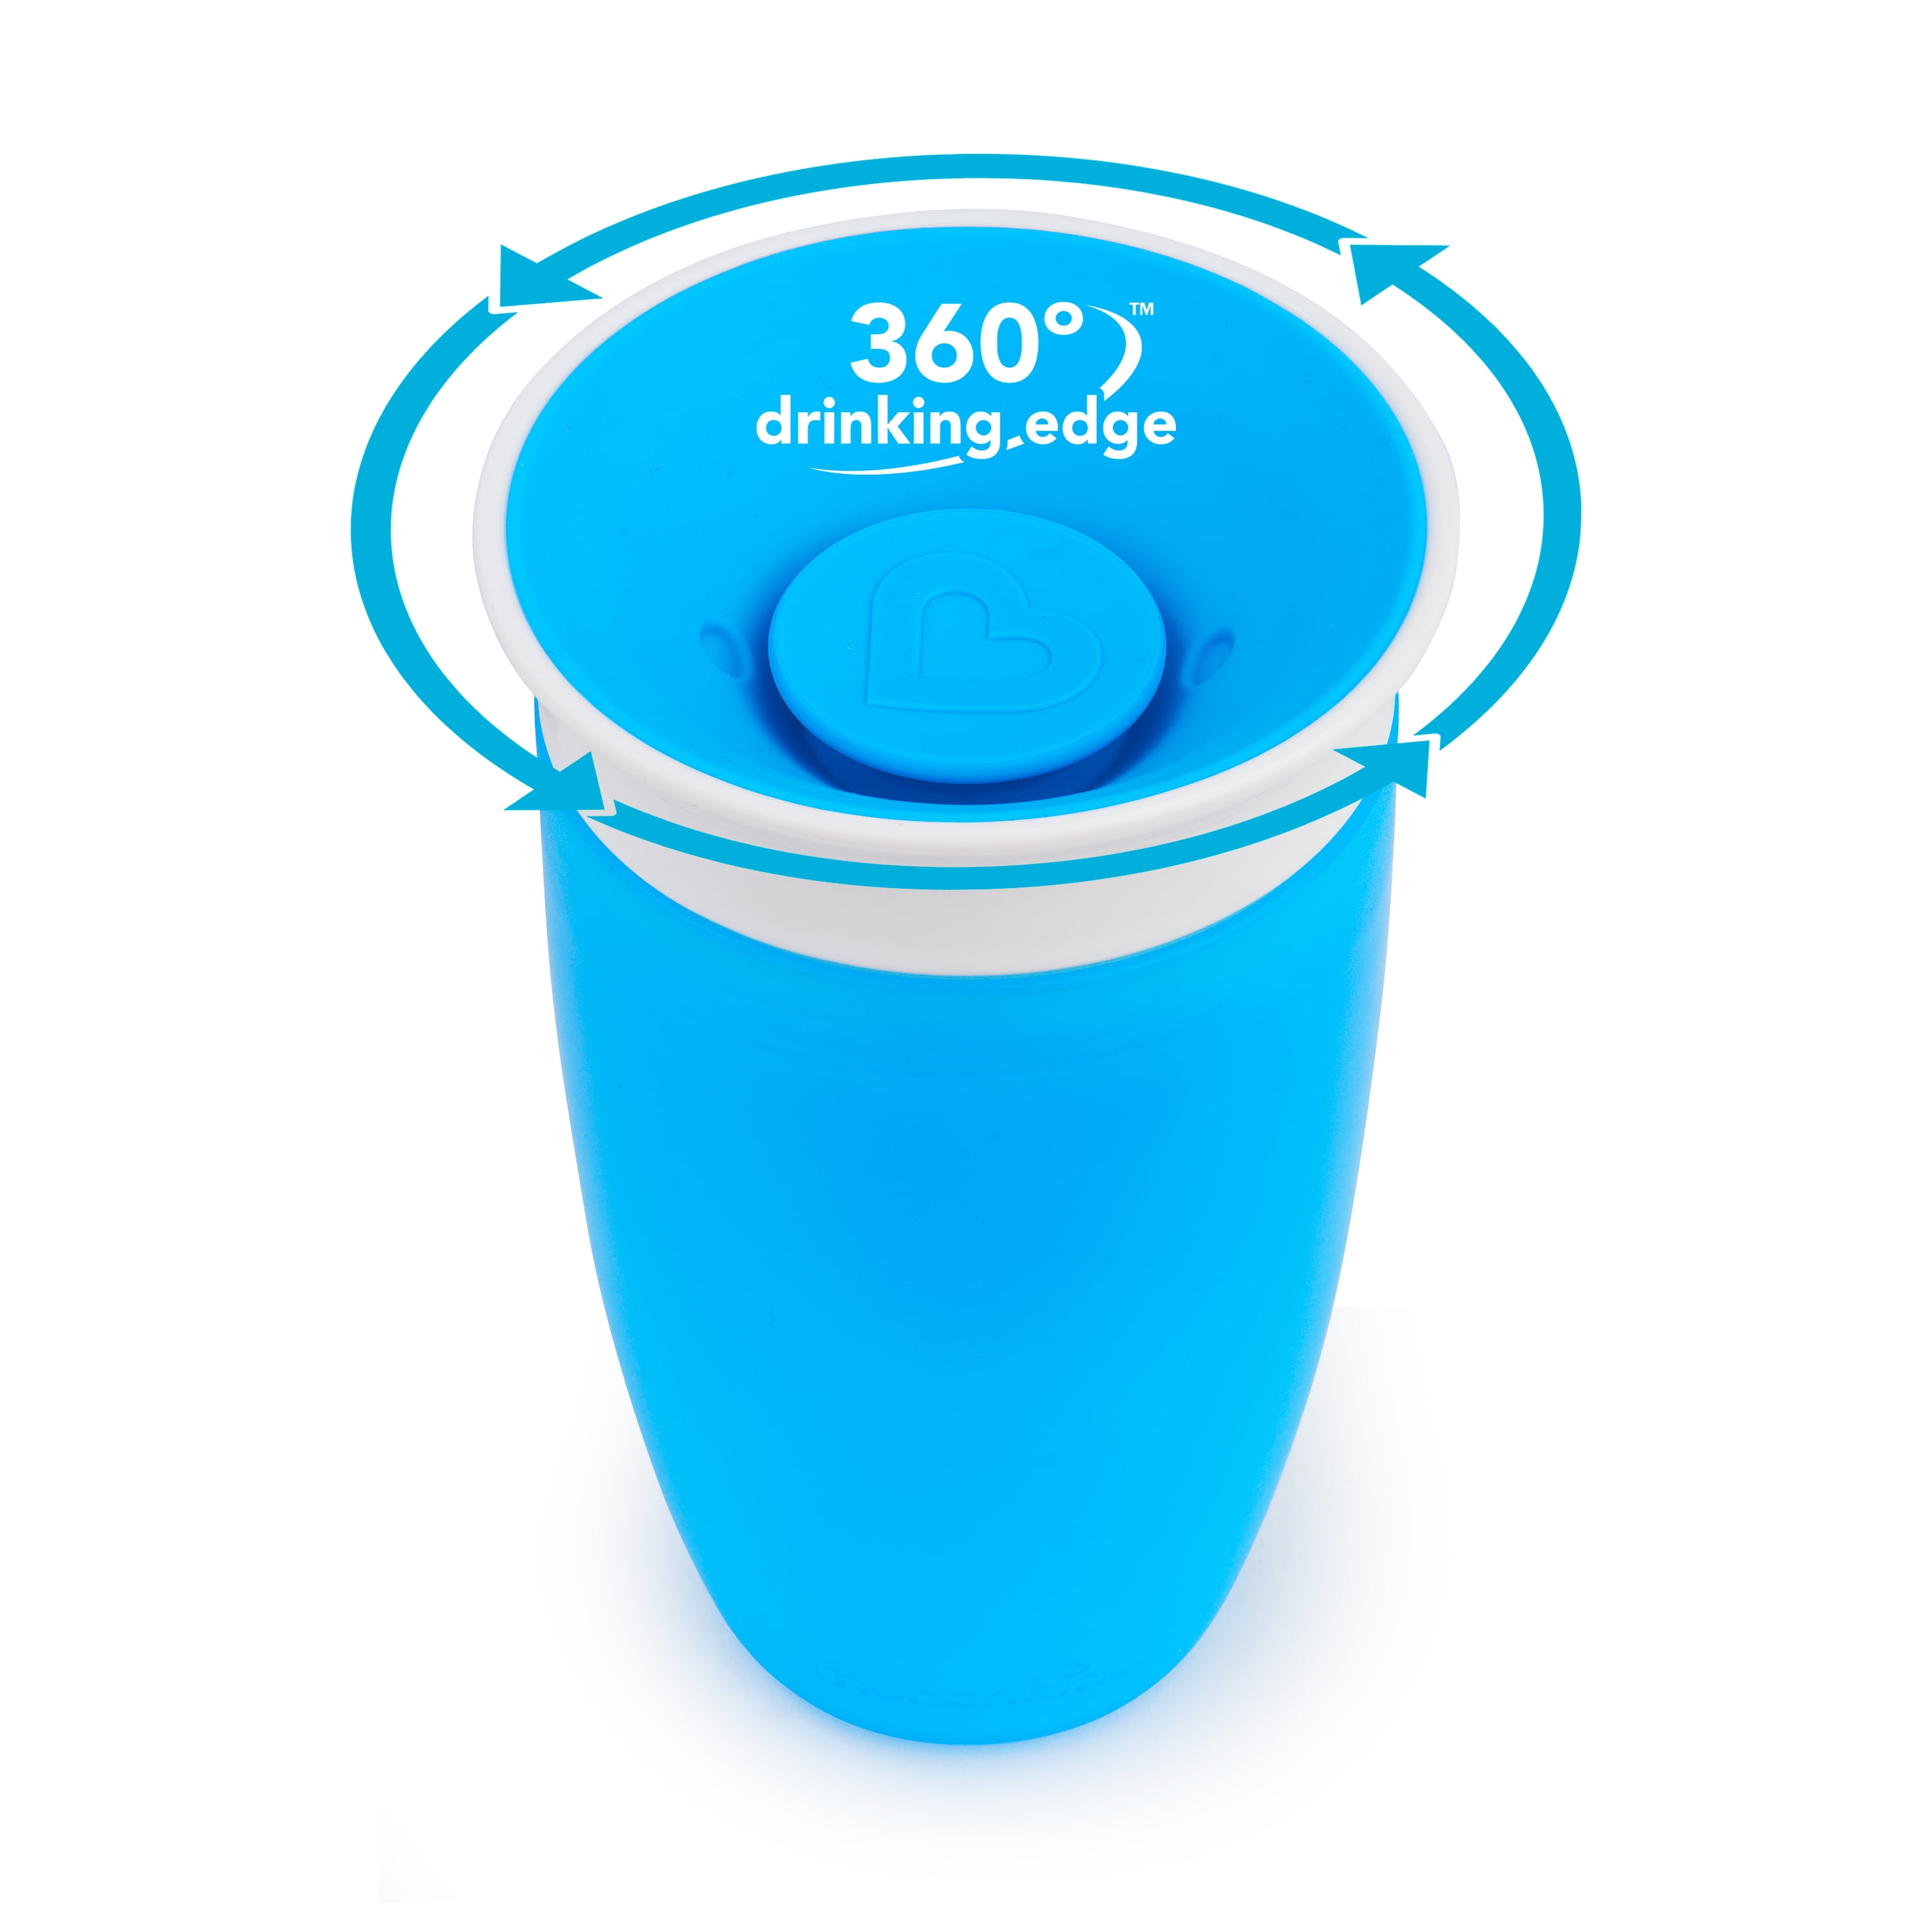 Munchkin Miracle 360 - Vaso antiderrames, azul/morado, 296 ml